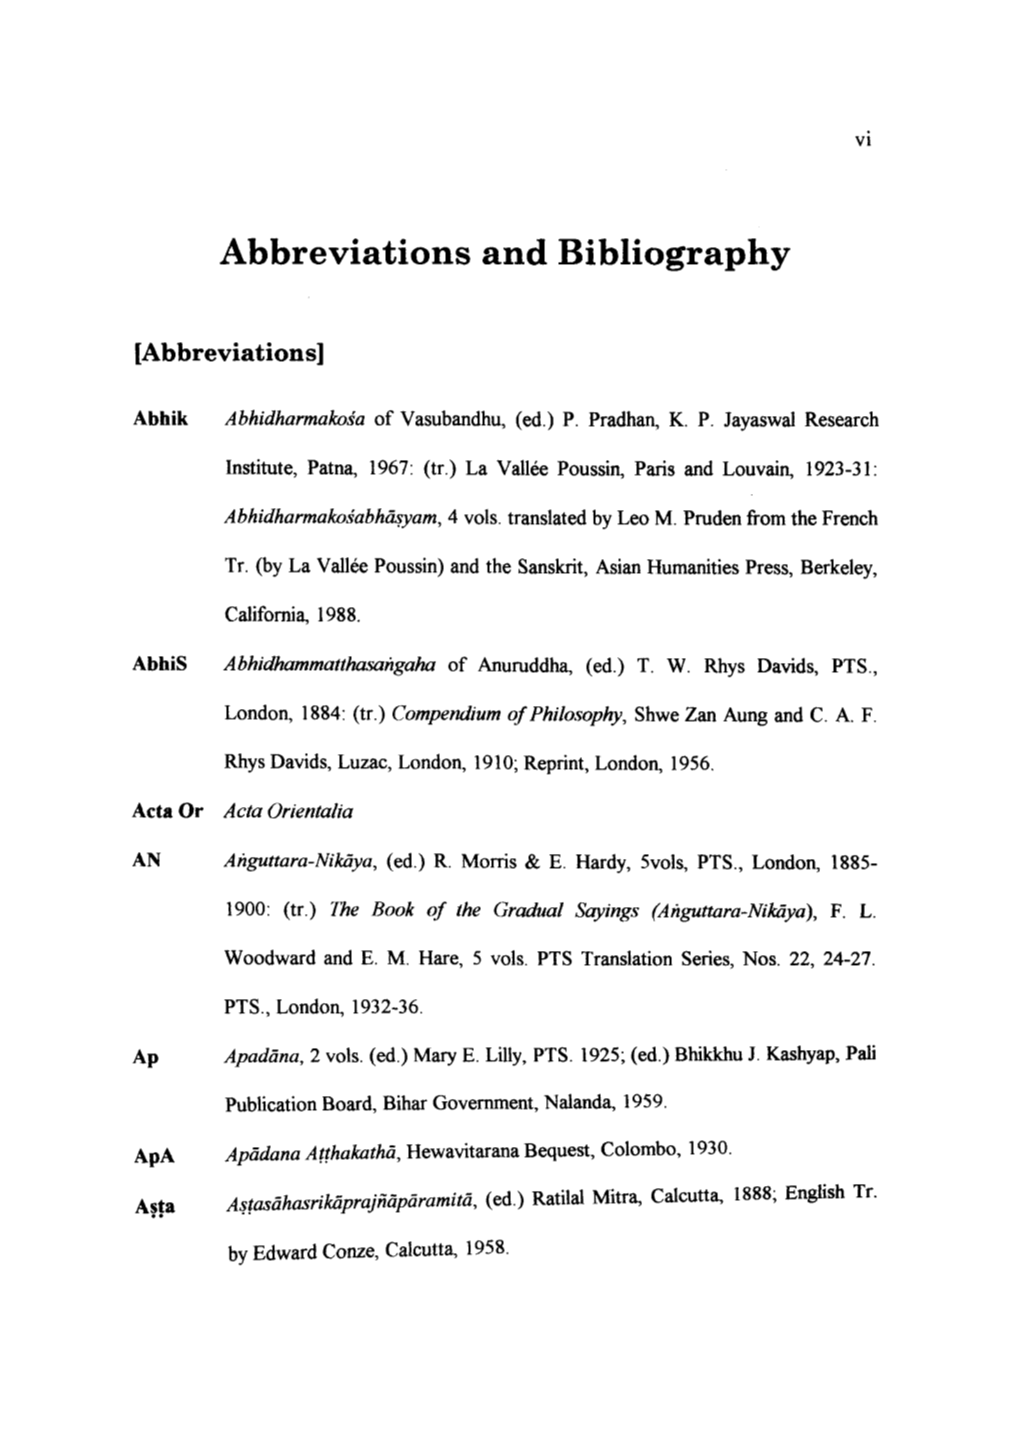 Abbreviations and Bibliography